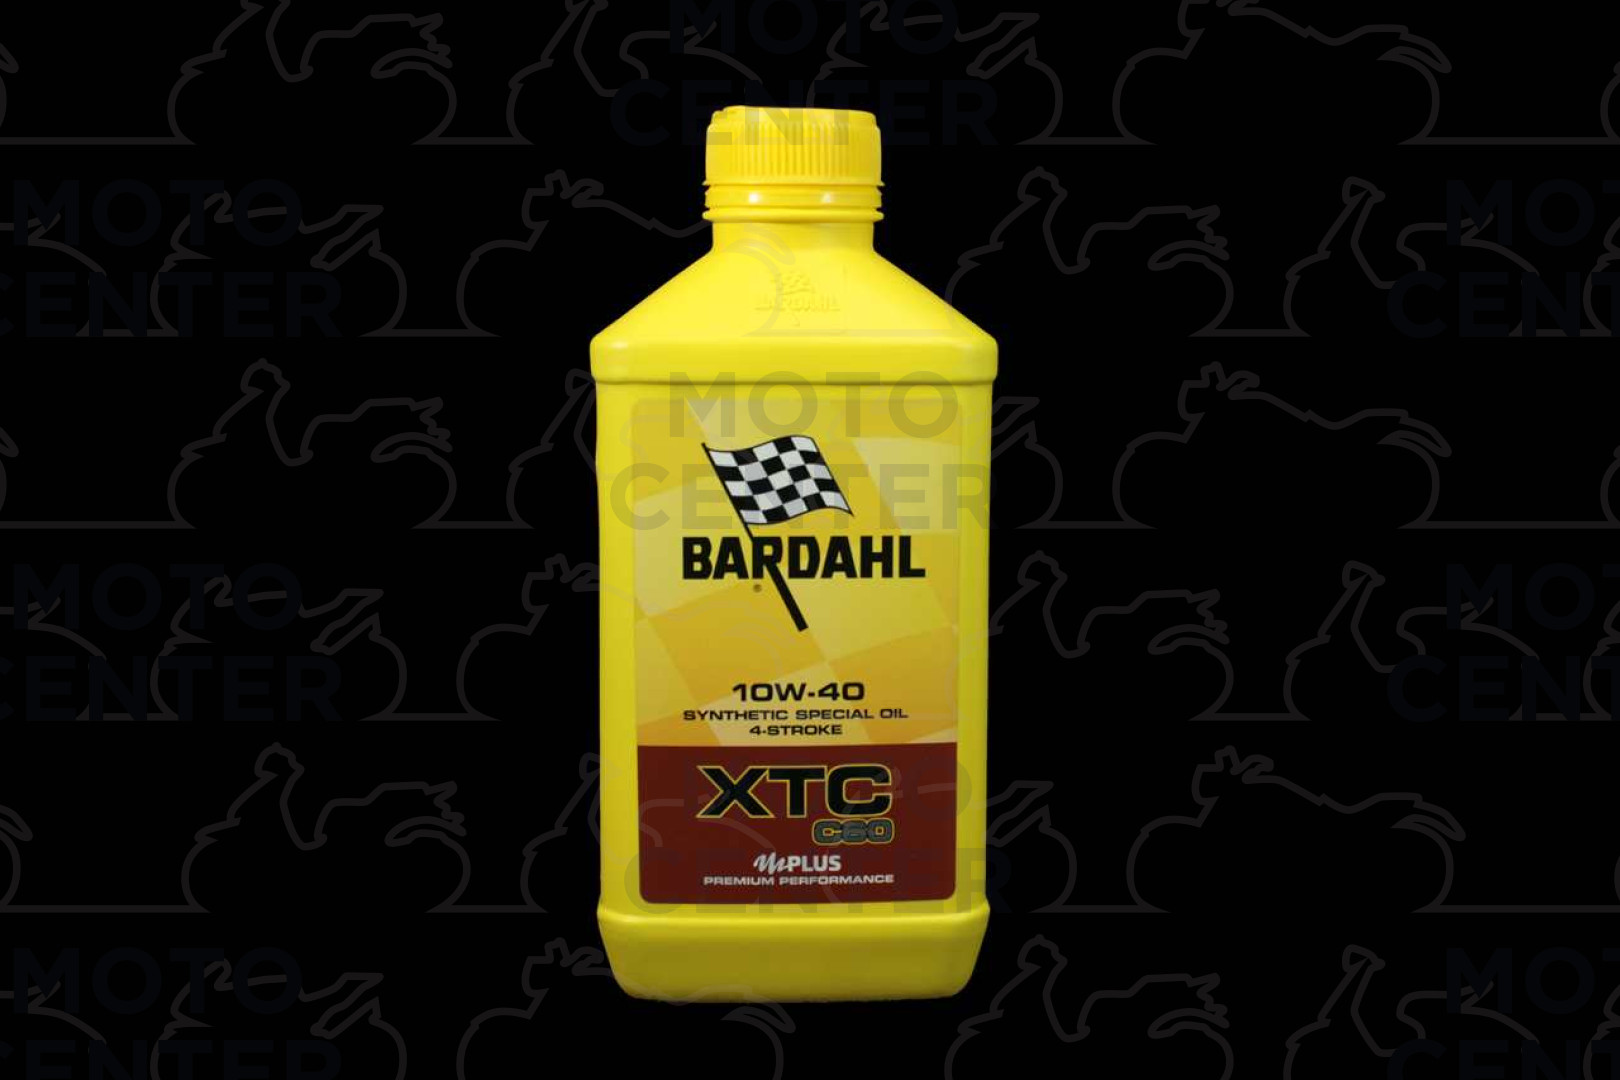 Bardahl Olio Moto XT4-S C60 4T 10W40 Racing Hypersport & Off-Road